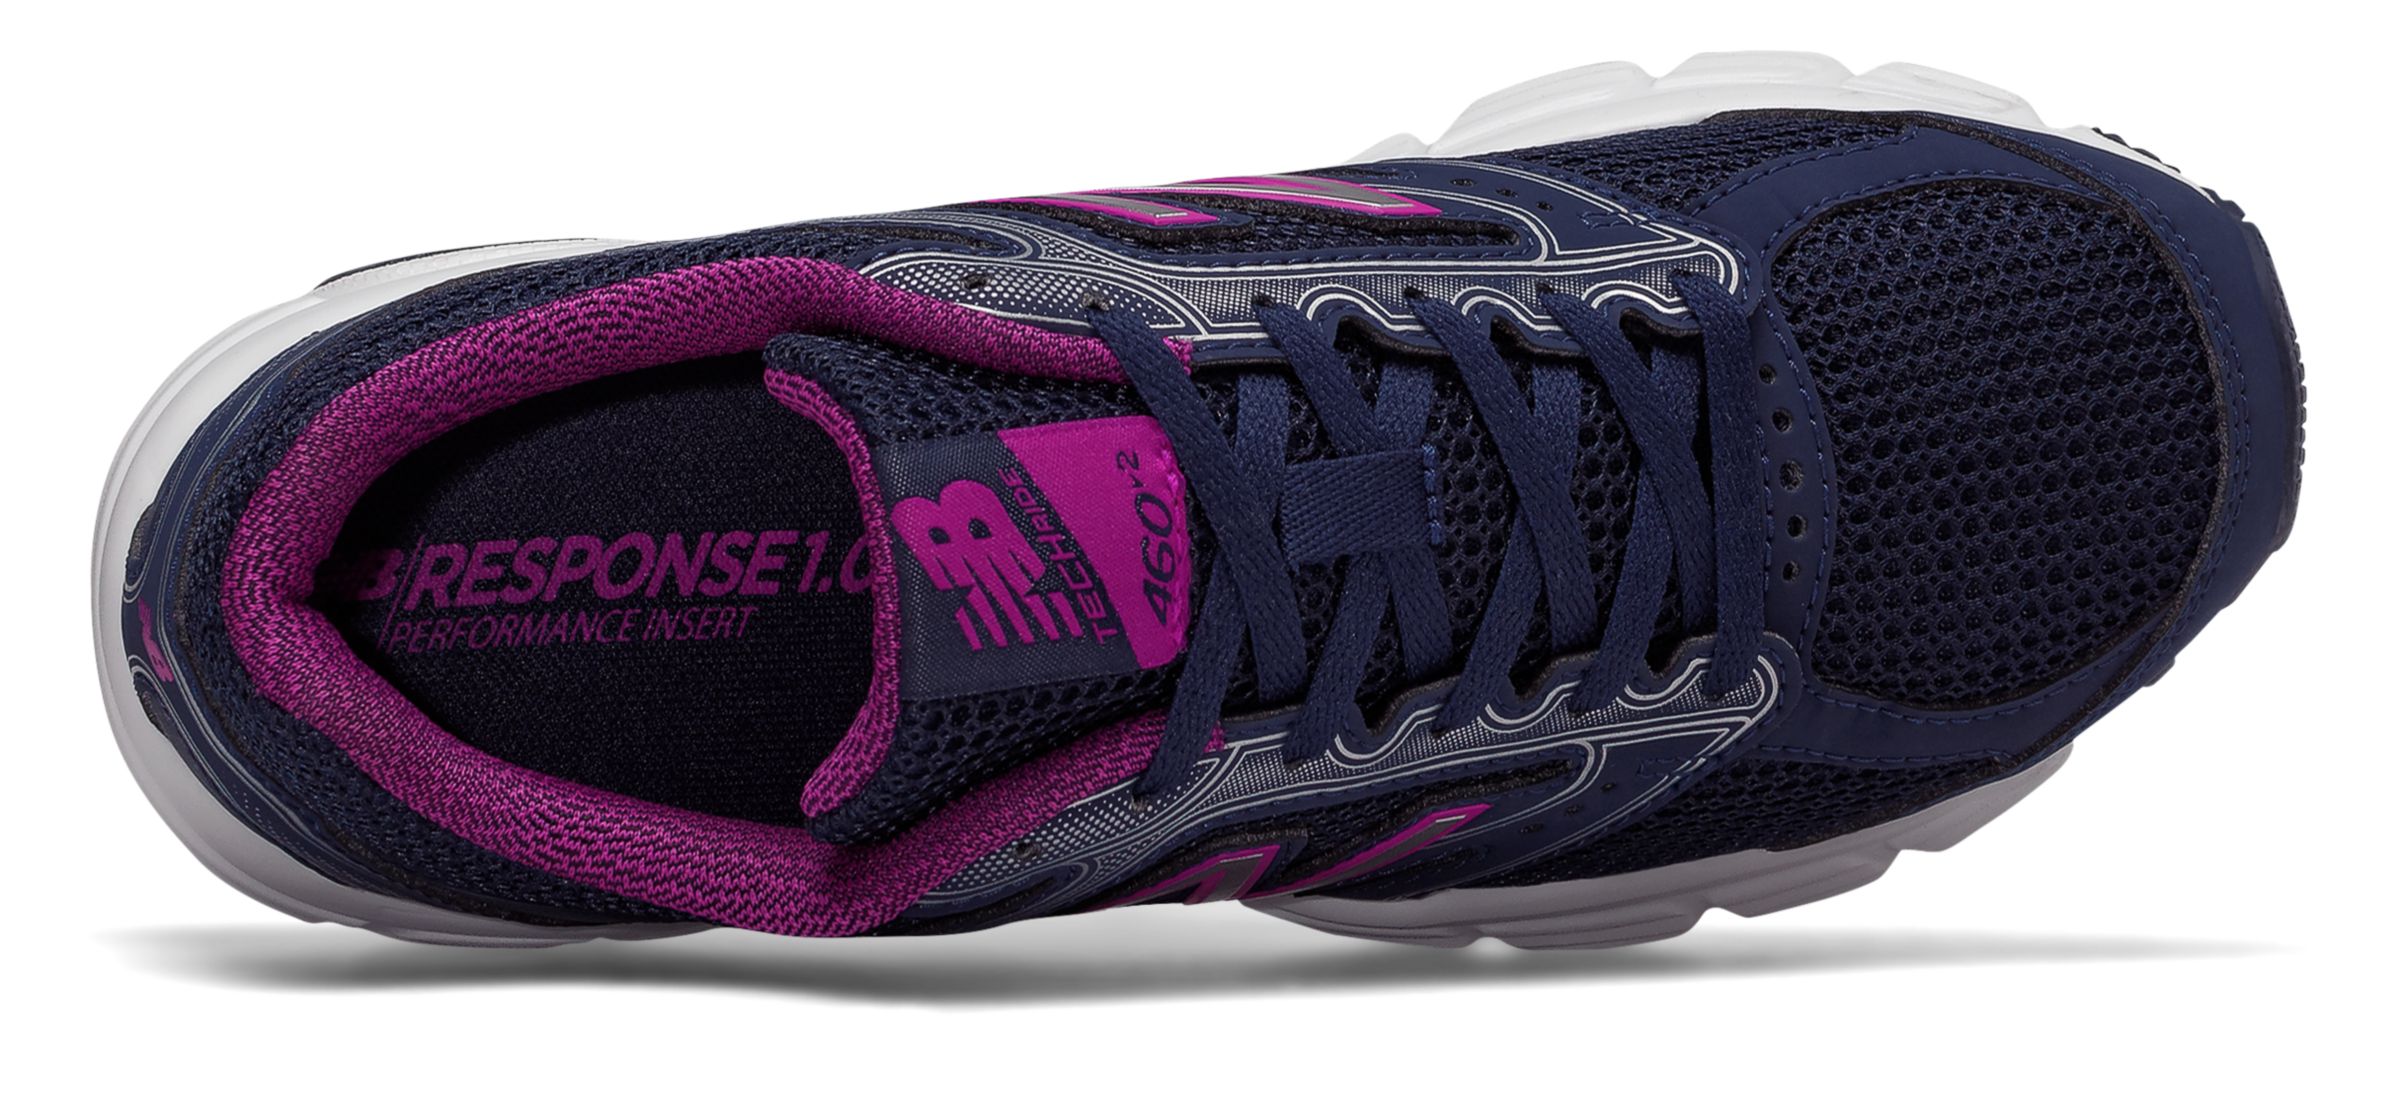 new balance 460 v2 women's running shoes